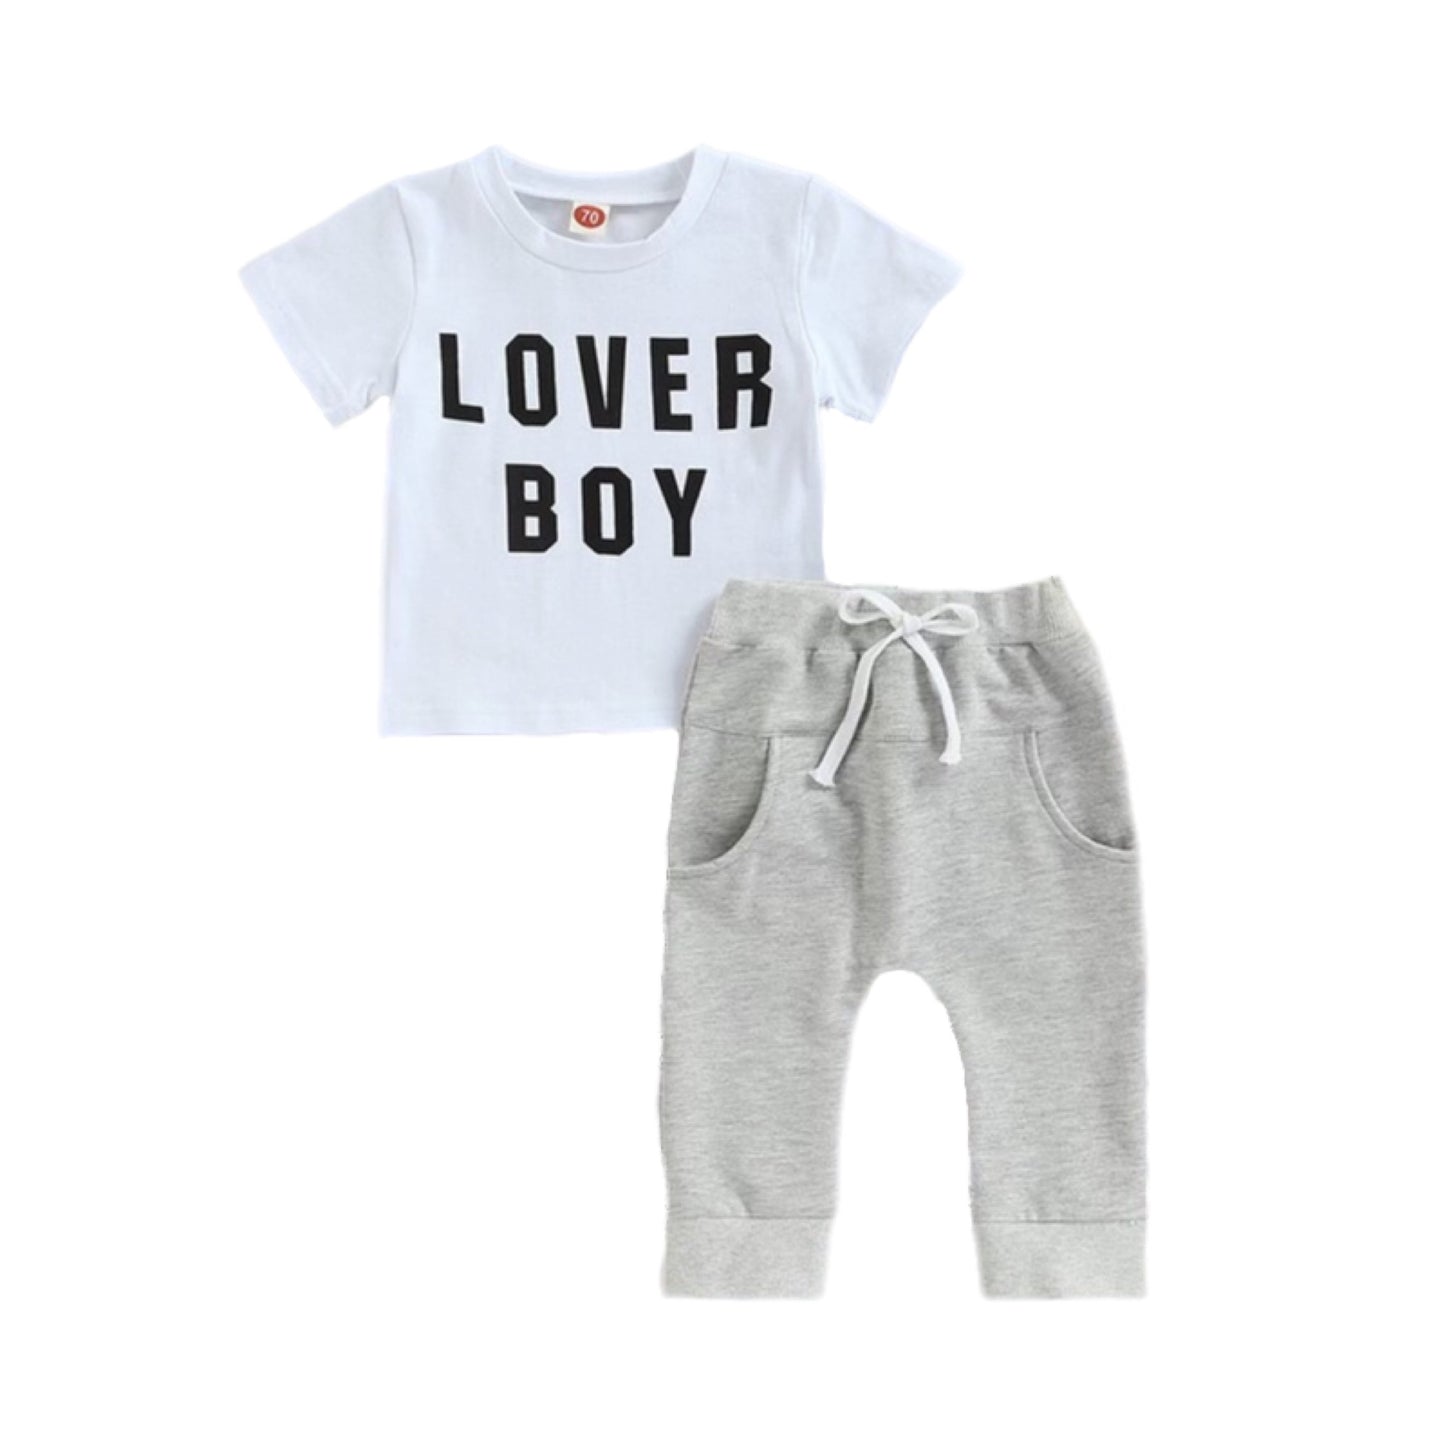 2 Pc Set: Infant Toddler Boys Lover Boy T-Shirt and Pants Set